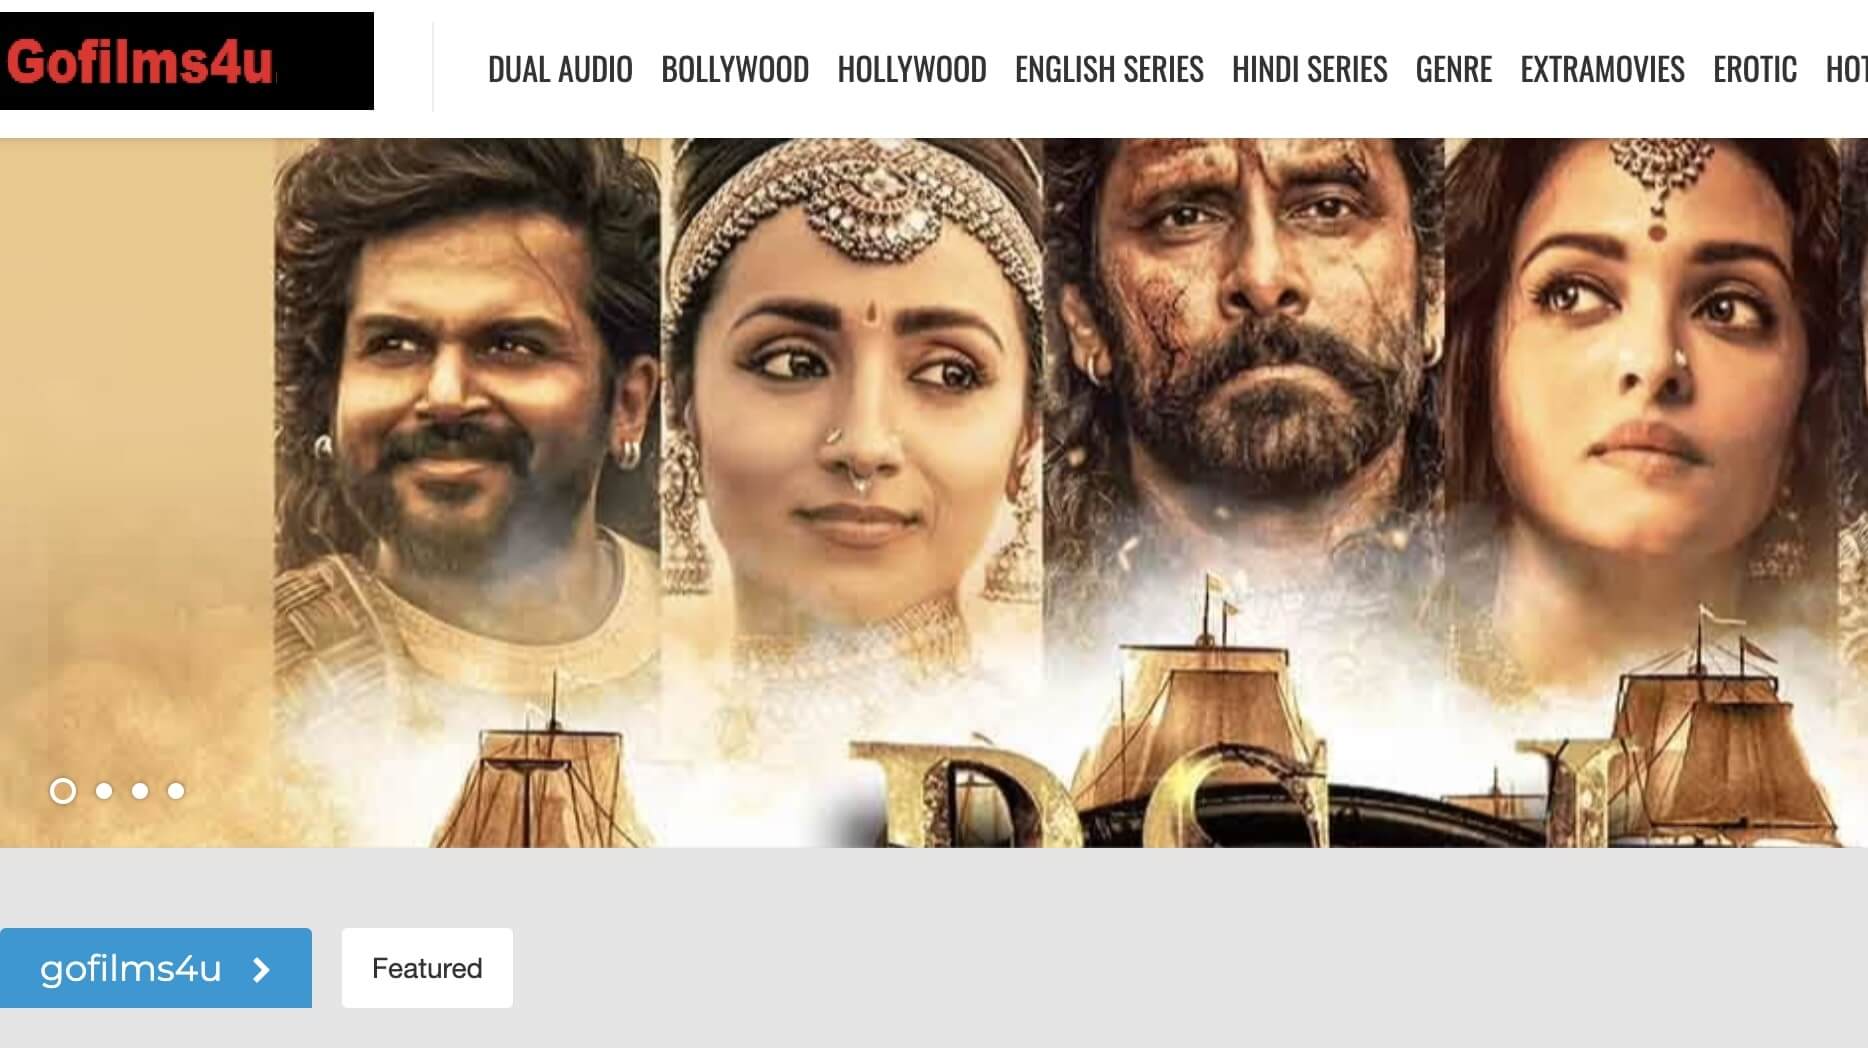   Watch-bollywood-movies-online-free-Gofilms4u  